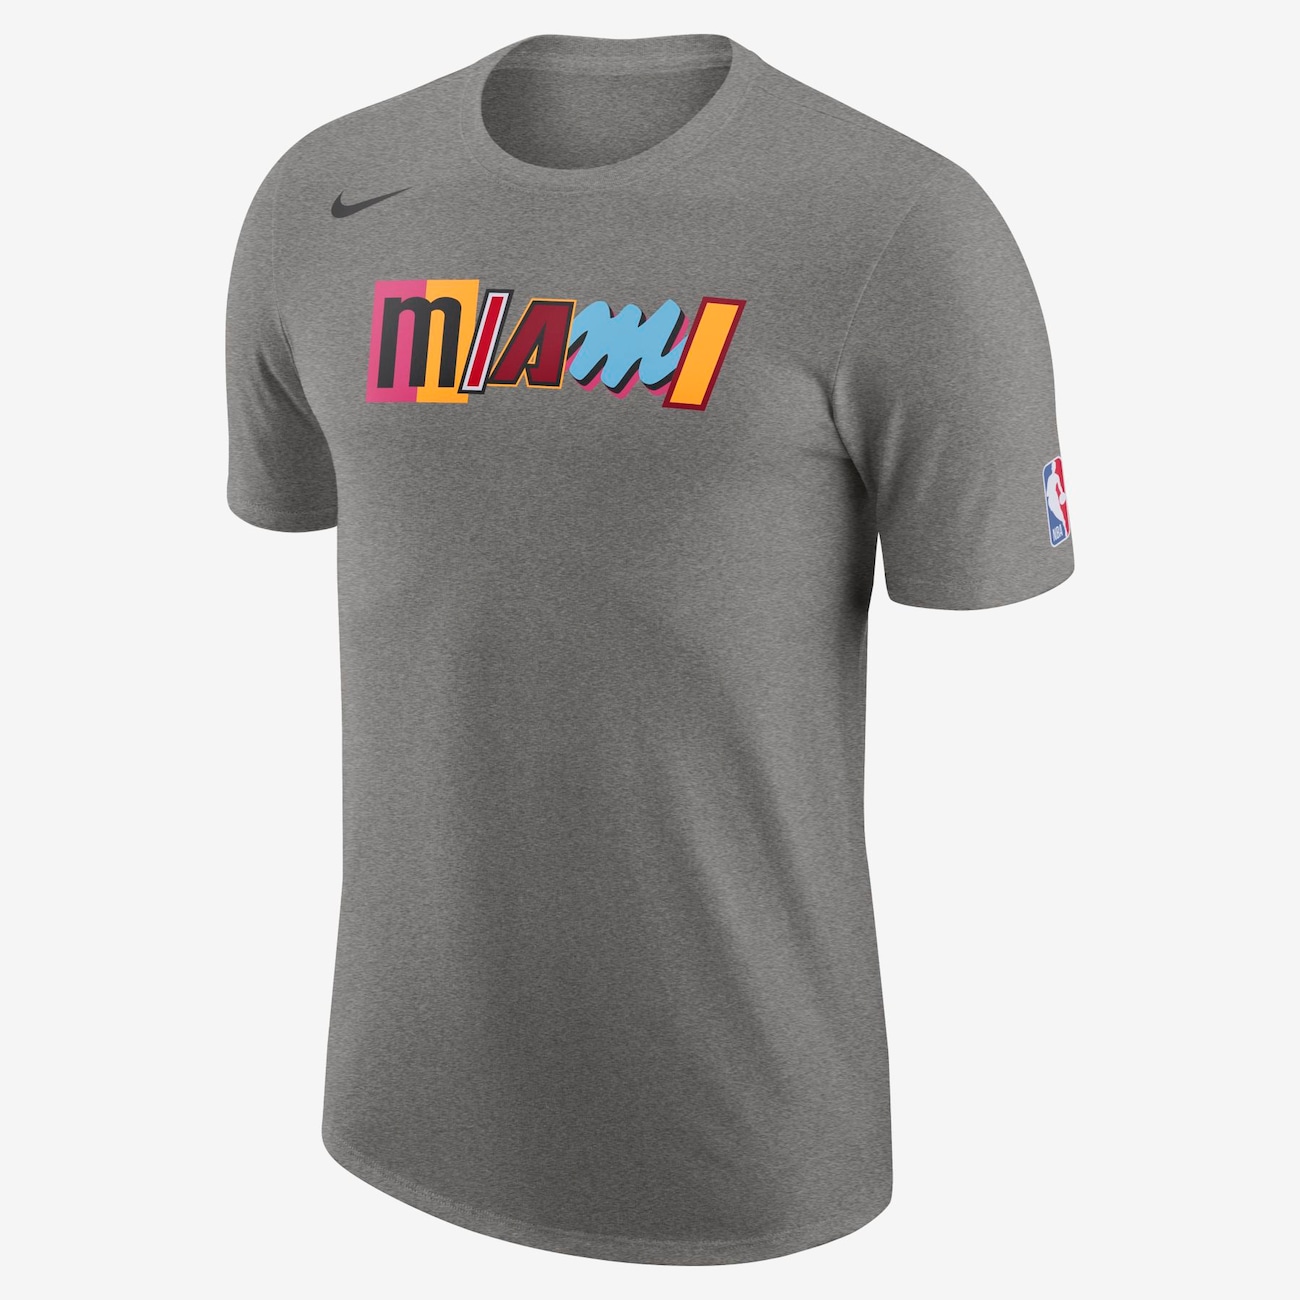 Camiseta Nike Heat City Edition Masculina - Melhora o